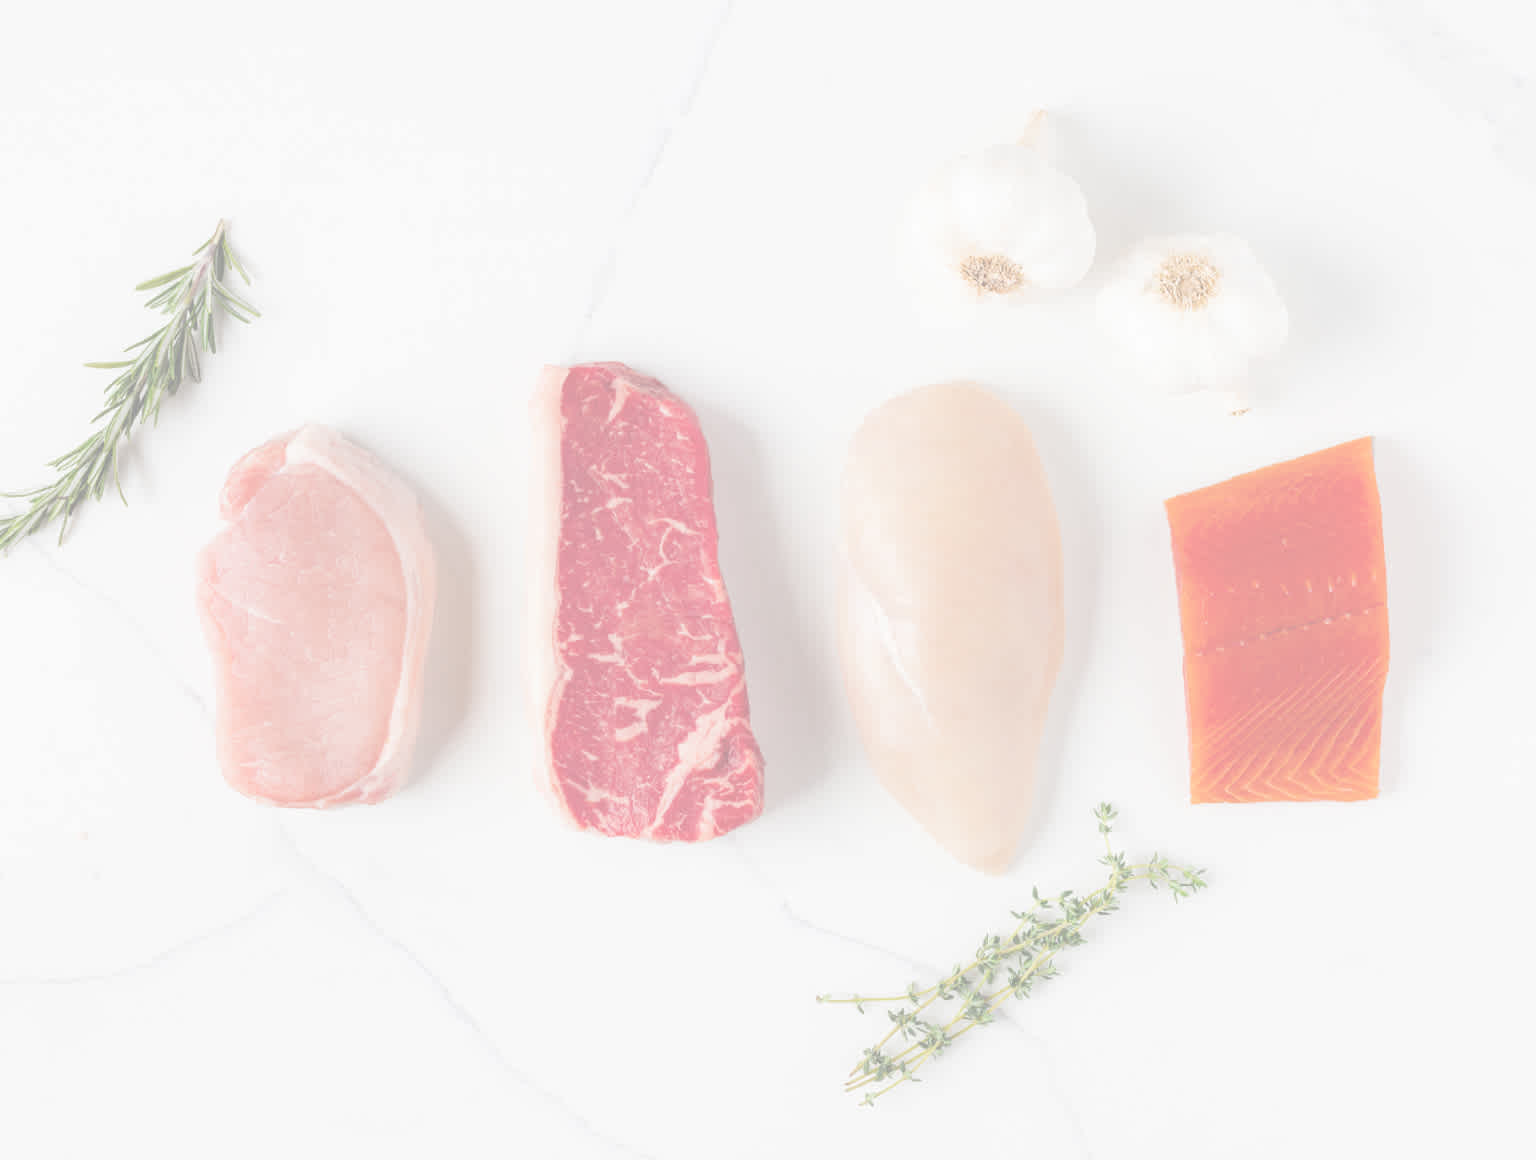 raw pork, steak, chicken and salmon on marble countertop